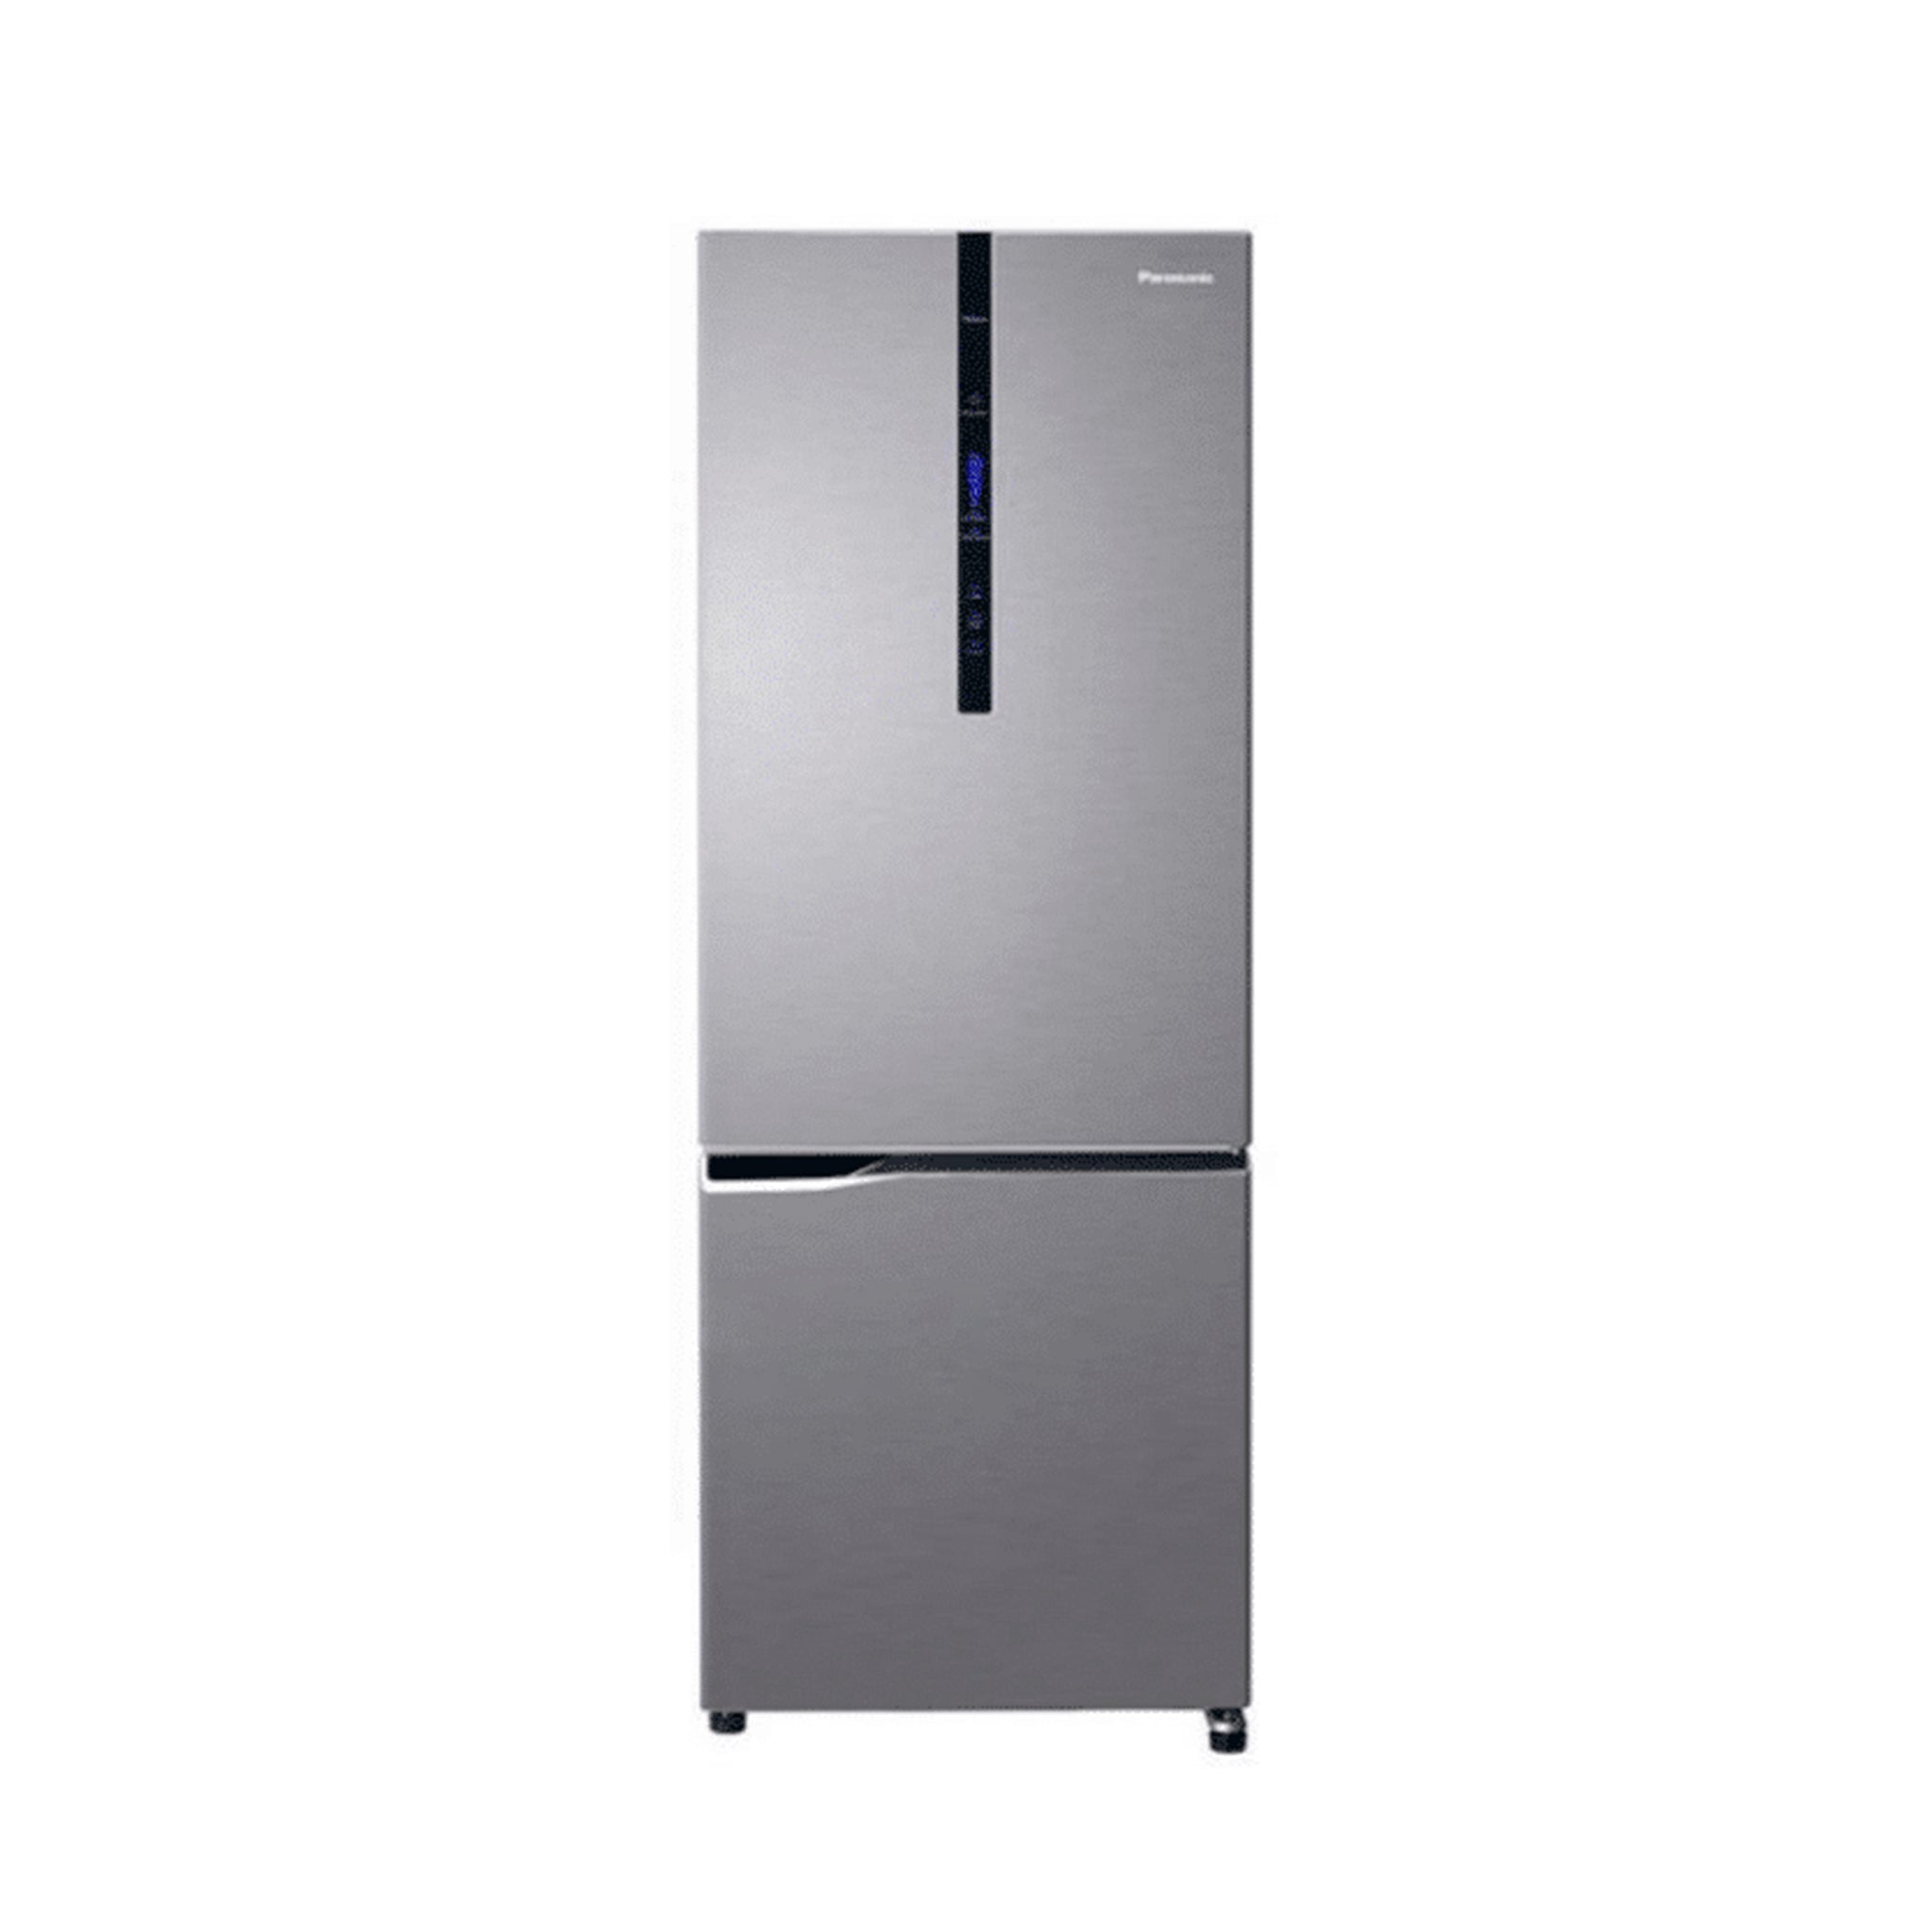 PANASONIC NR-BV320XSPH 2-Door Bottom Freezer Refrigerator Panasonic